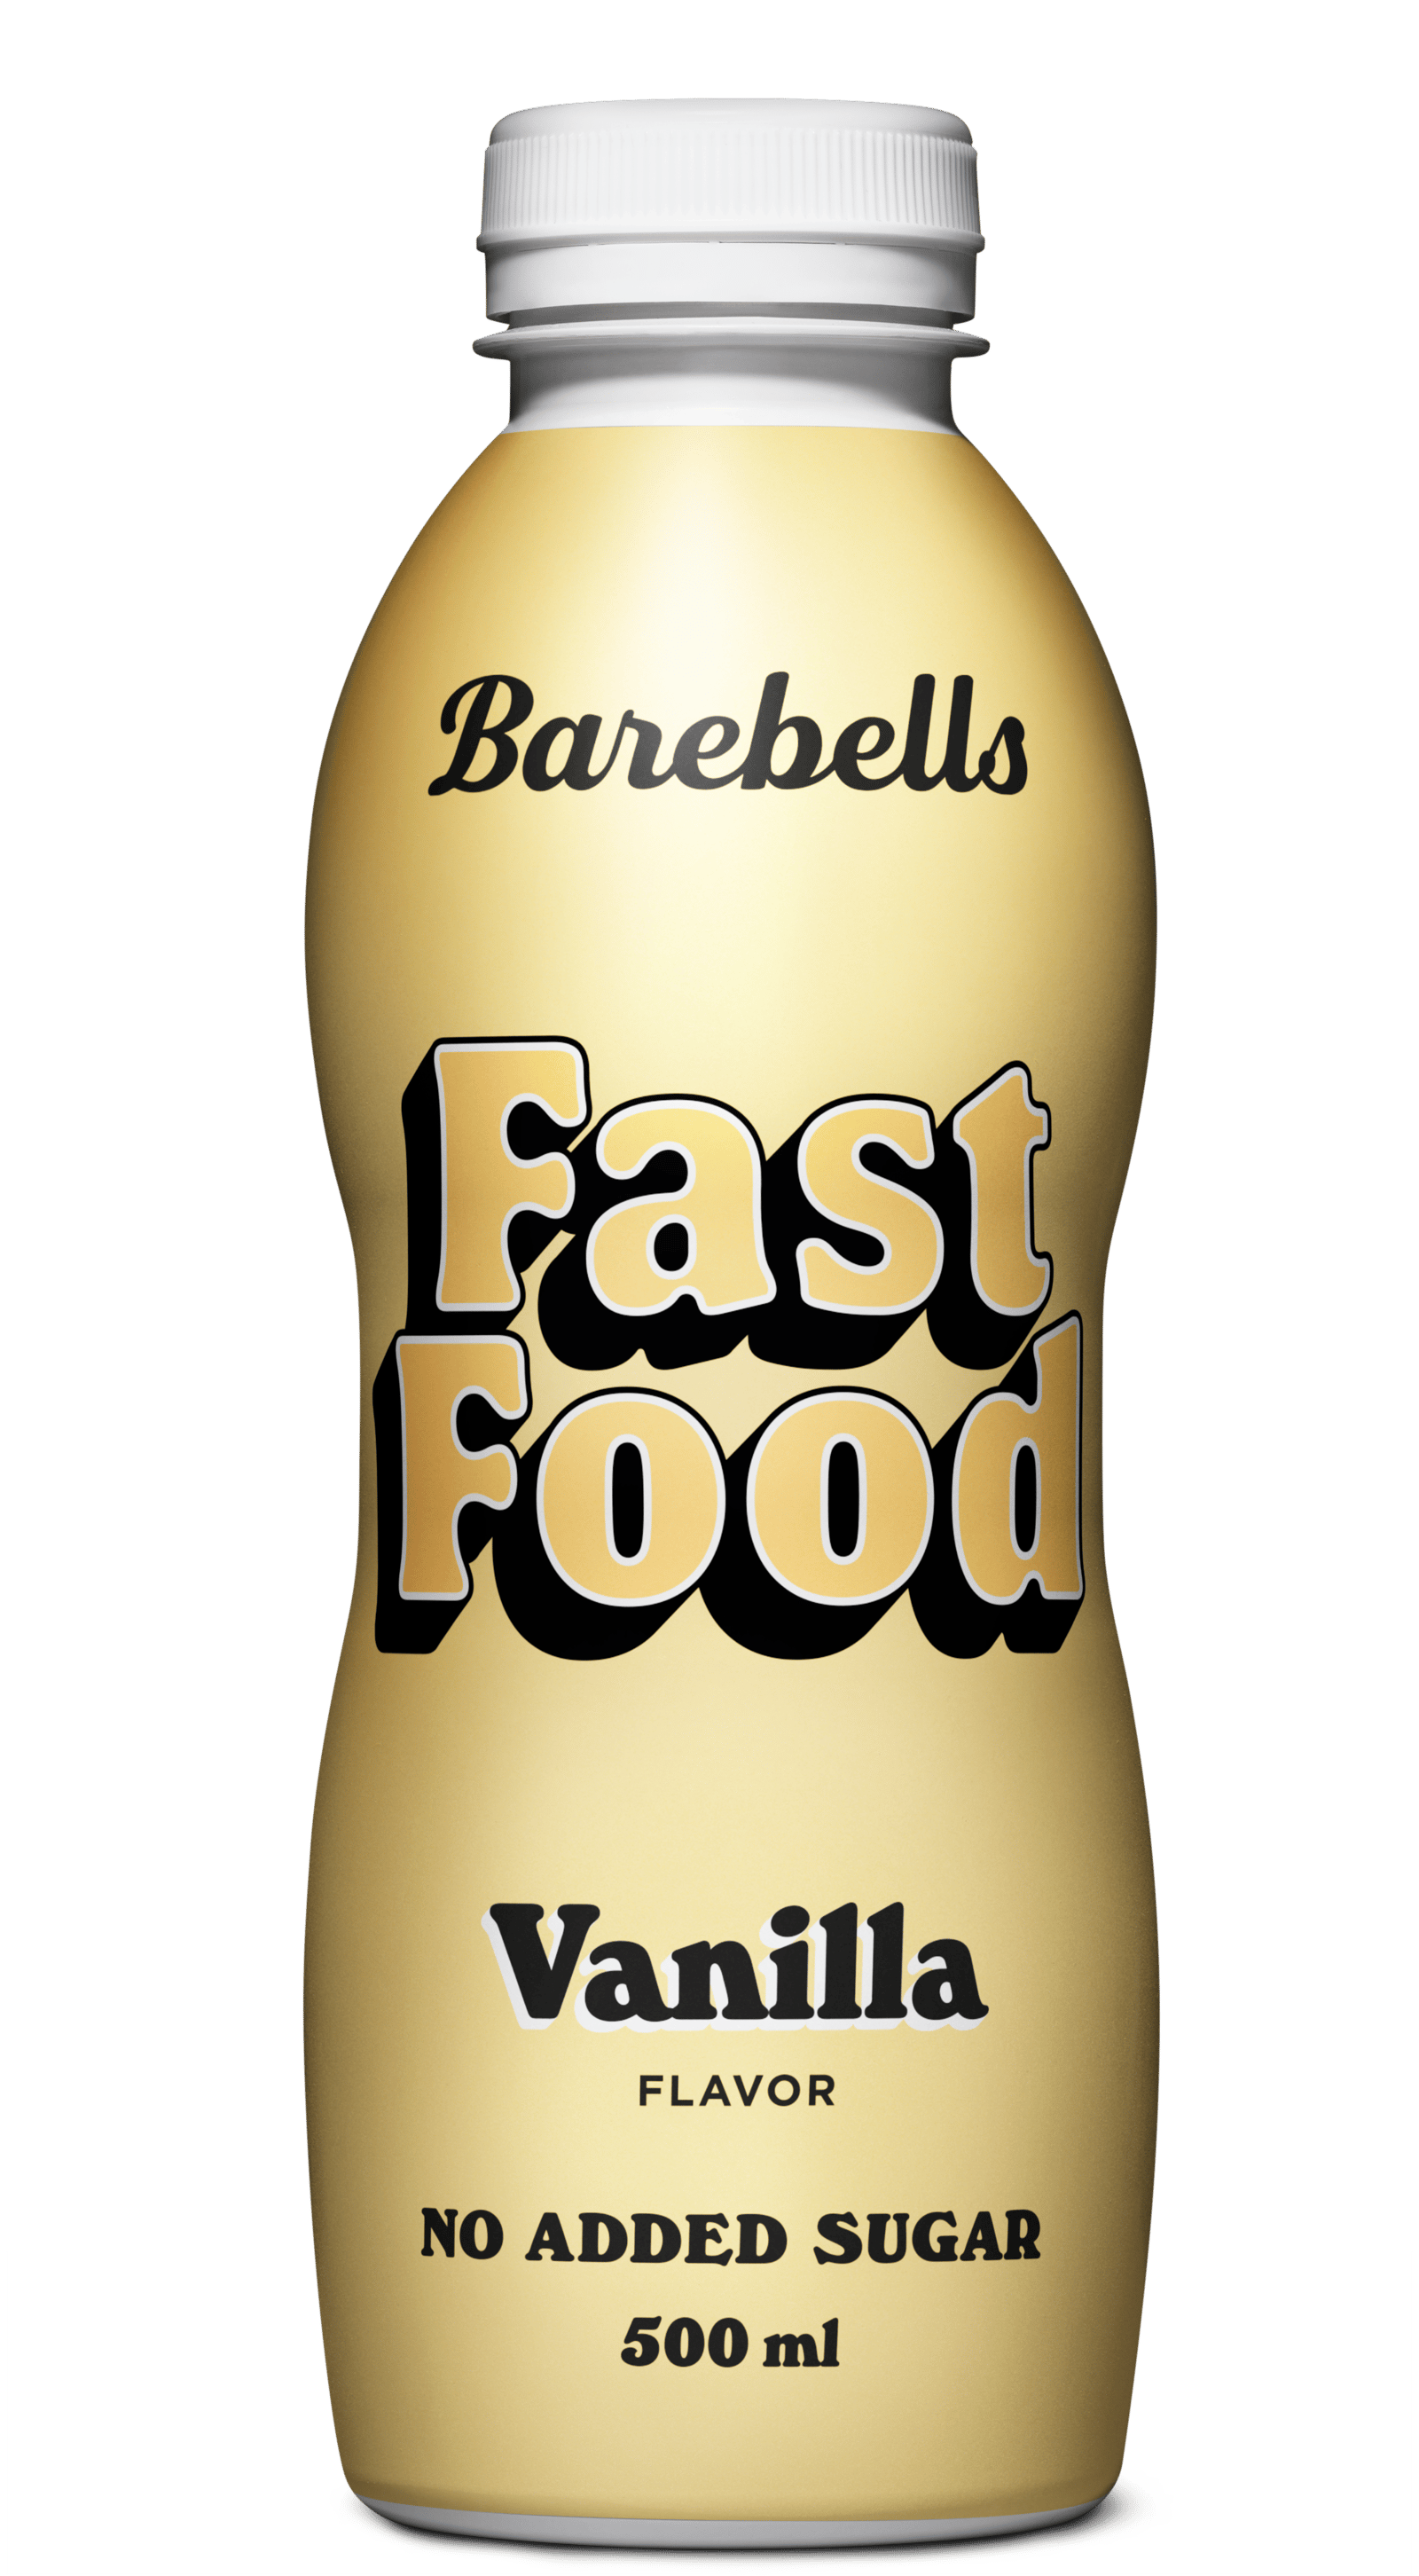 Barebells Fast Food Vanilla